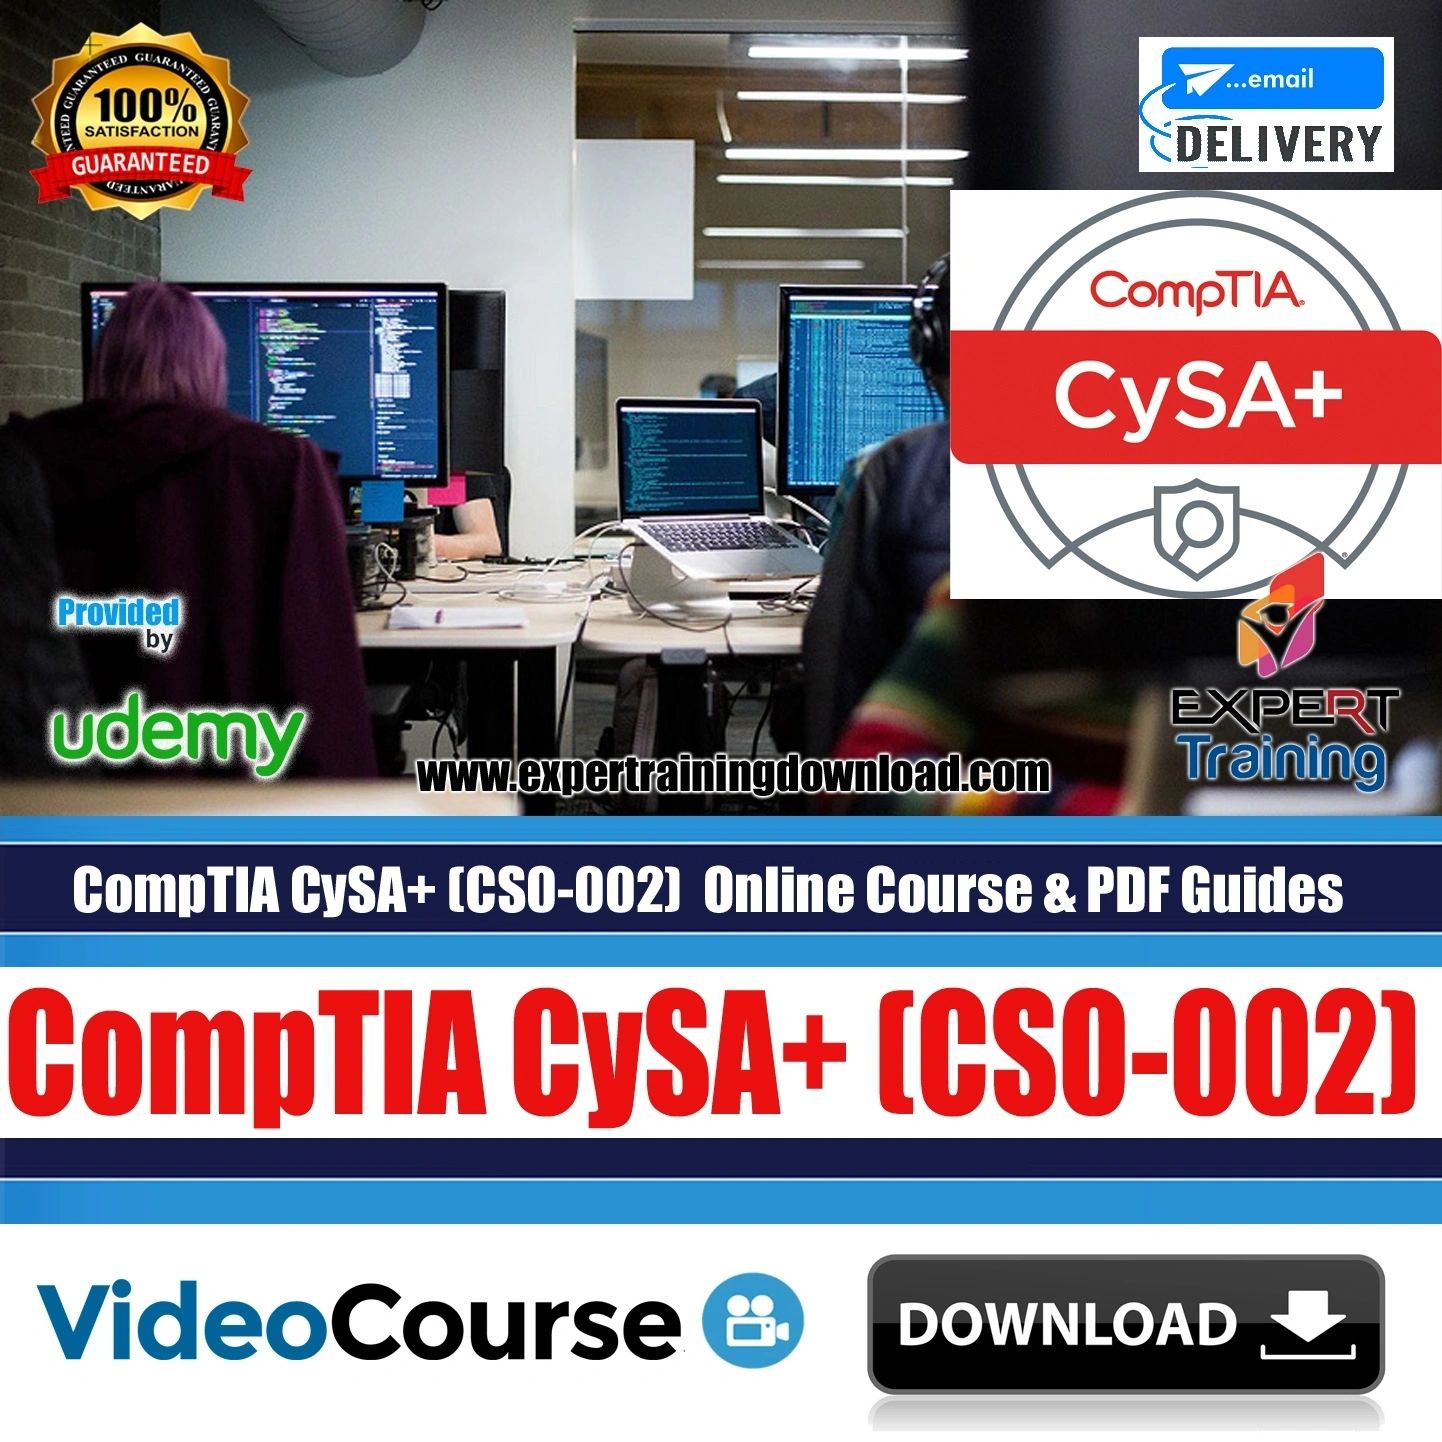 CompTIA CySA+ (CS0-002) Online Course & PDF Guides